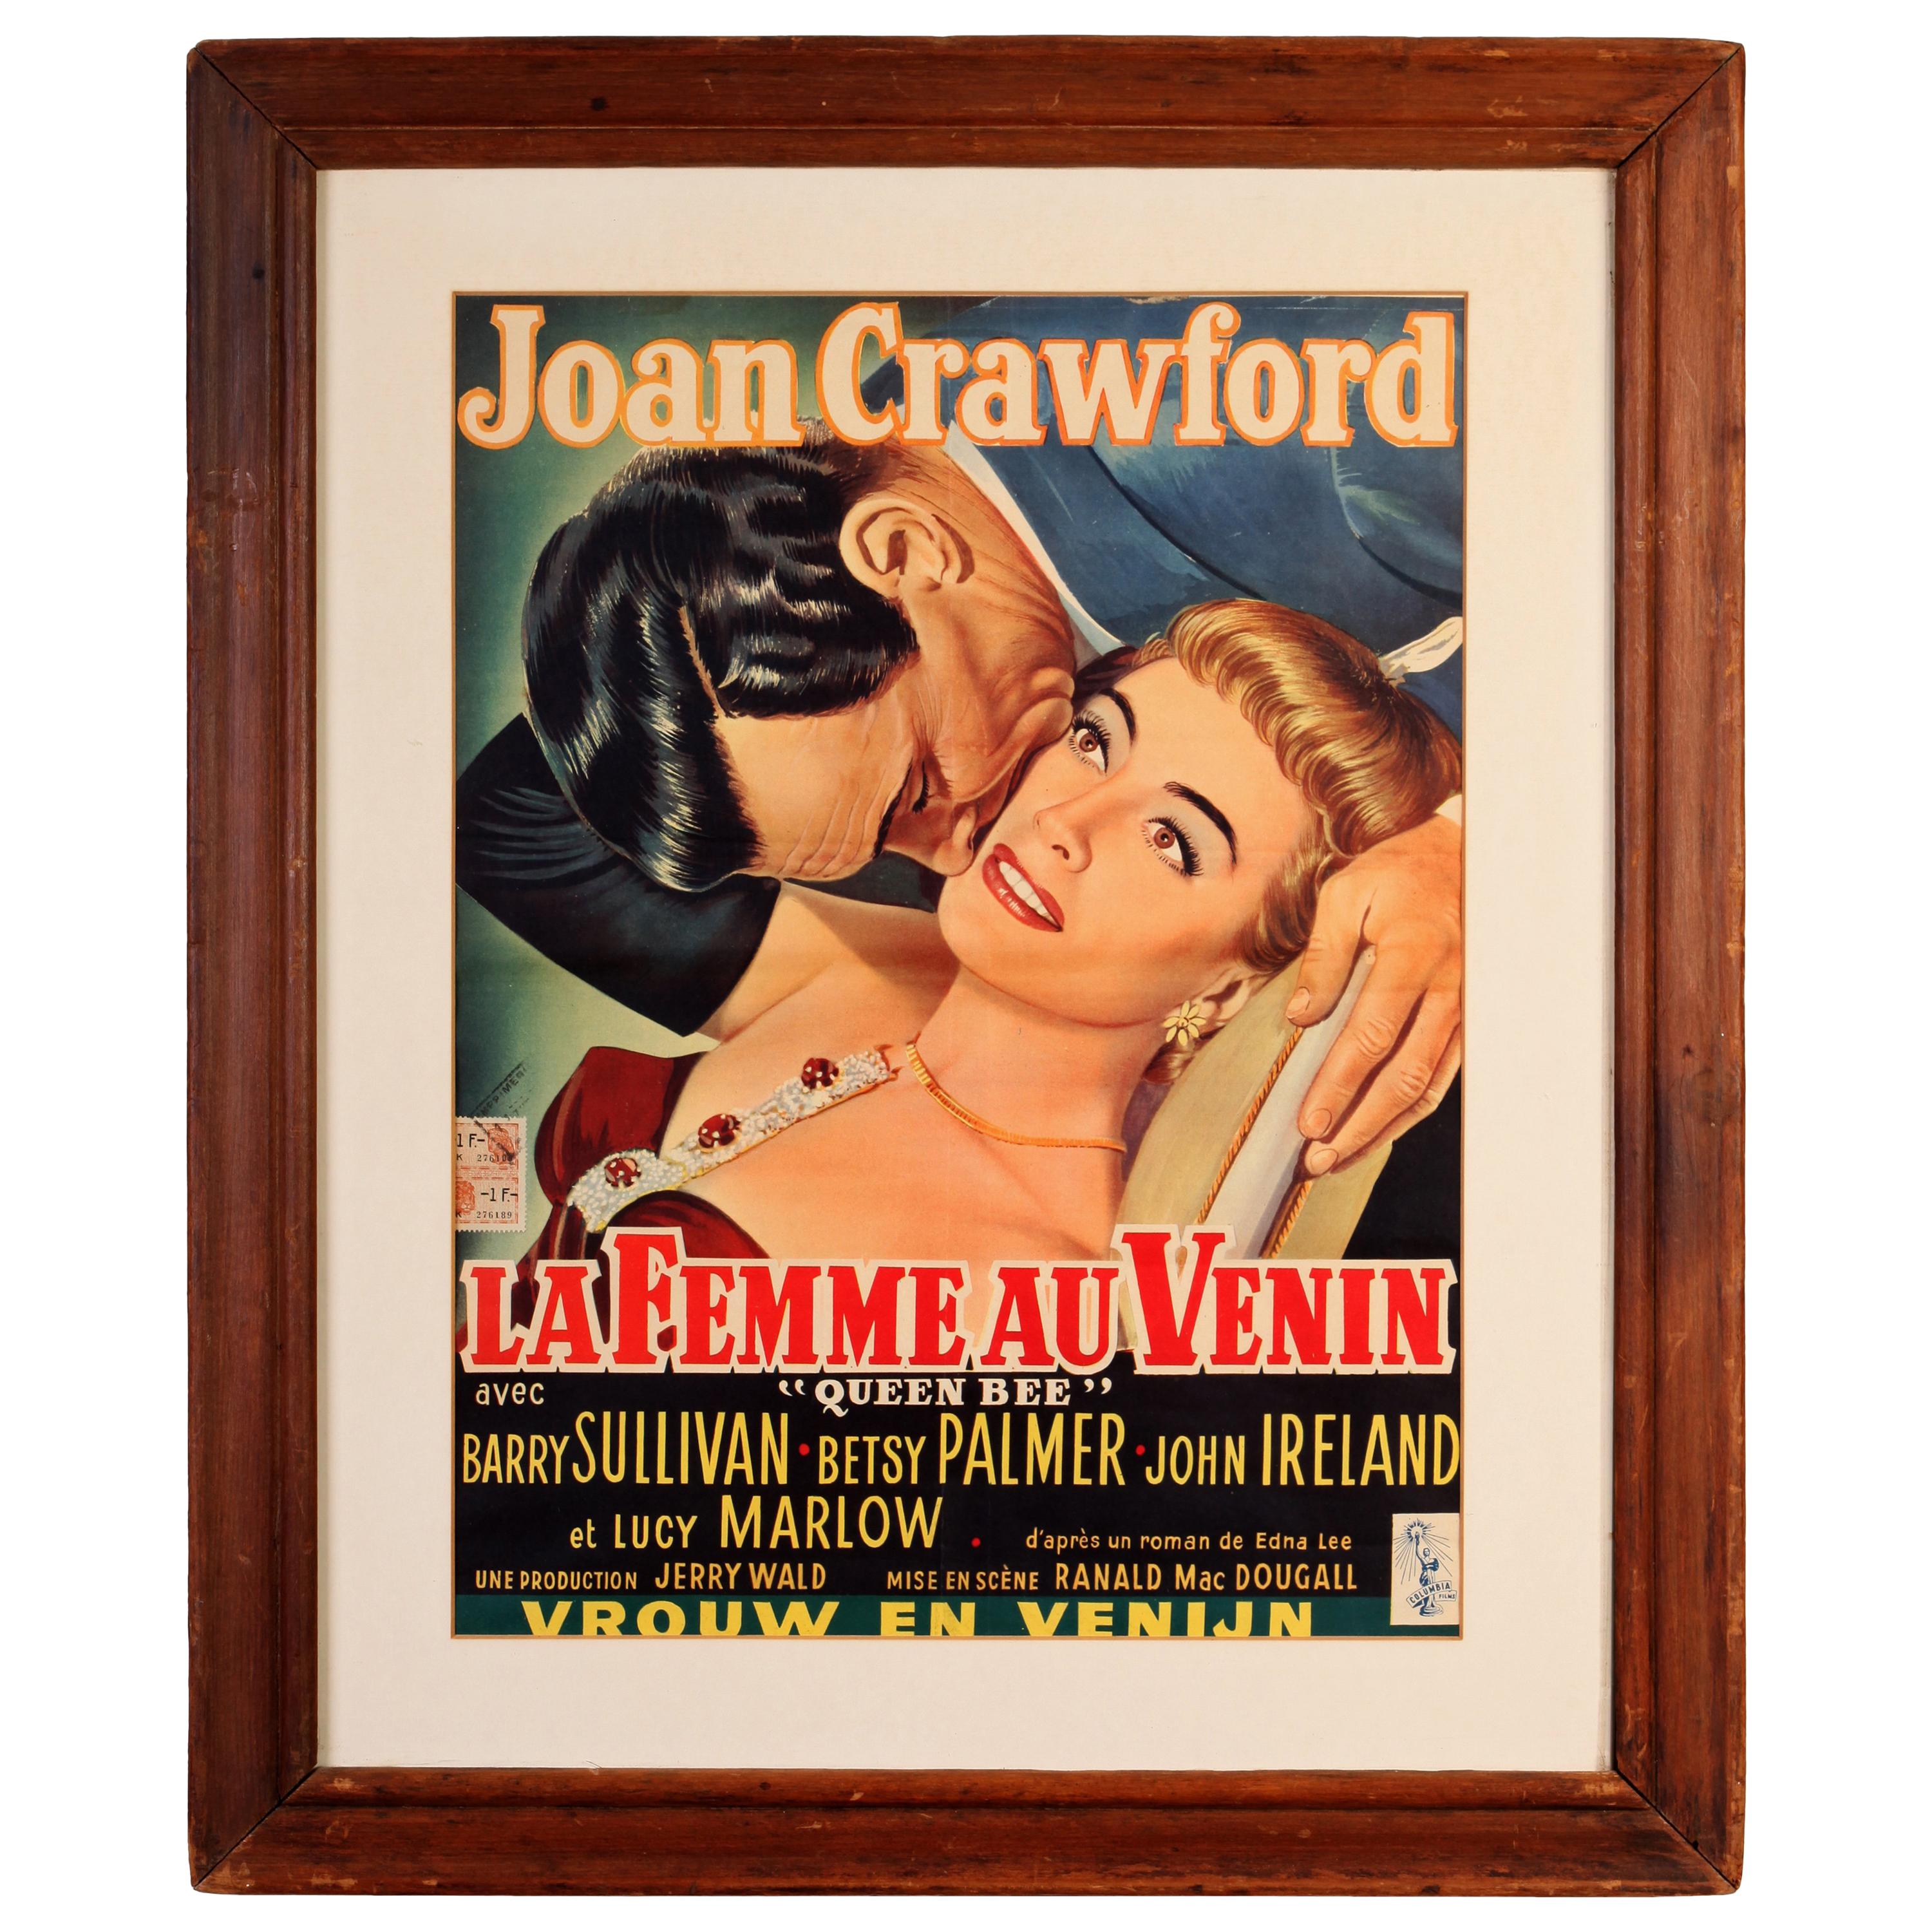 Joan Crawford und Ingrid Bergman, Vintage-Filmplakat, Queen Bee und Intermezzo im Angebot